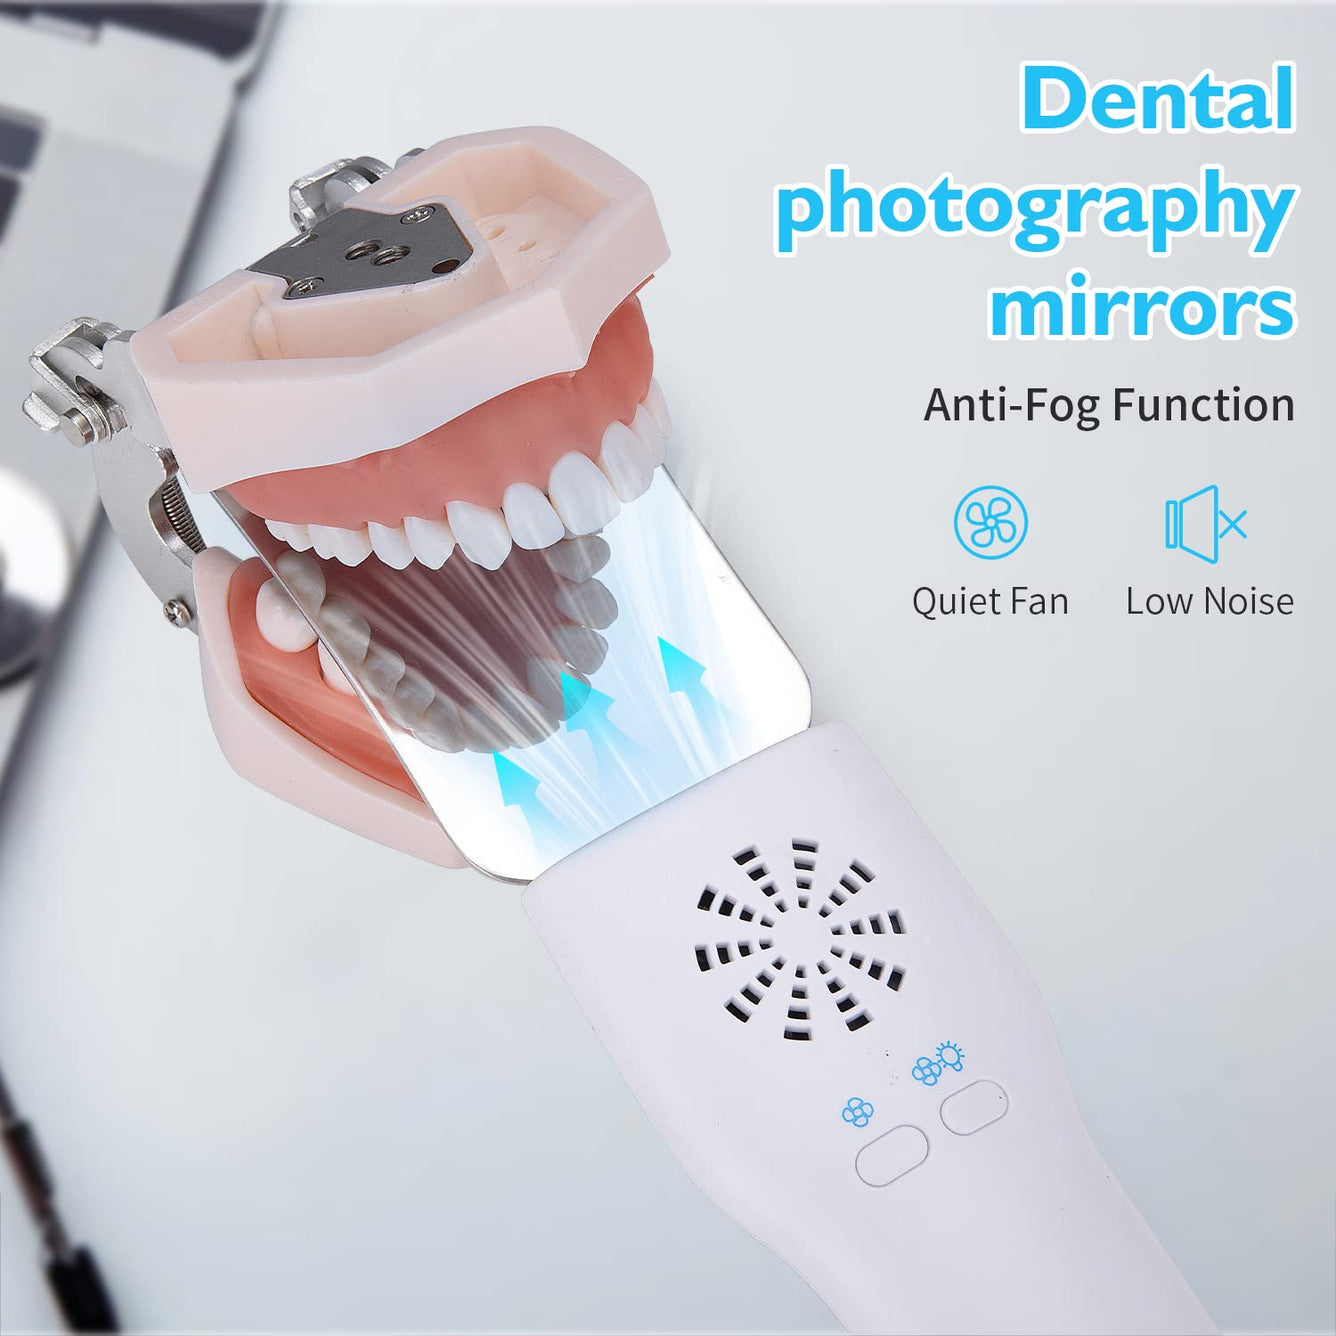 MirrorsX™ - Smart Anti-Fog Dental Mirrors